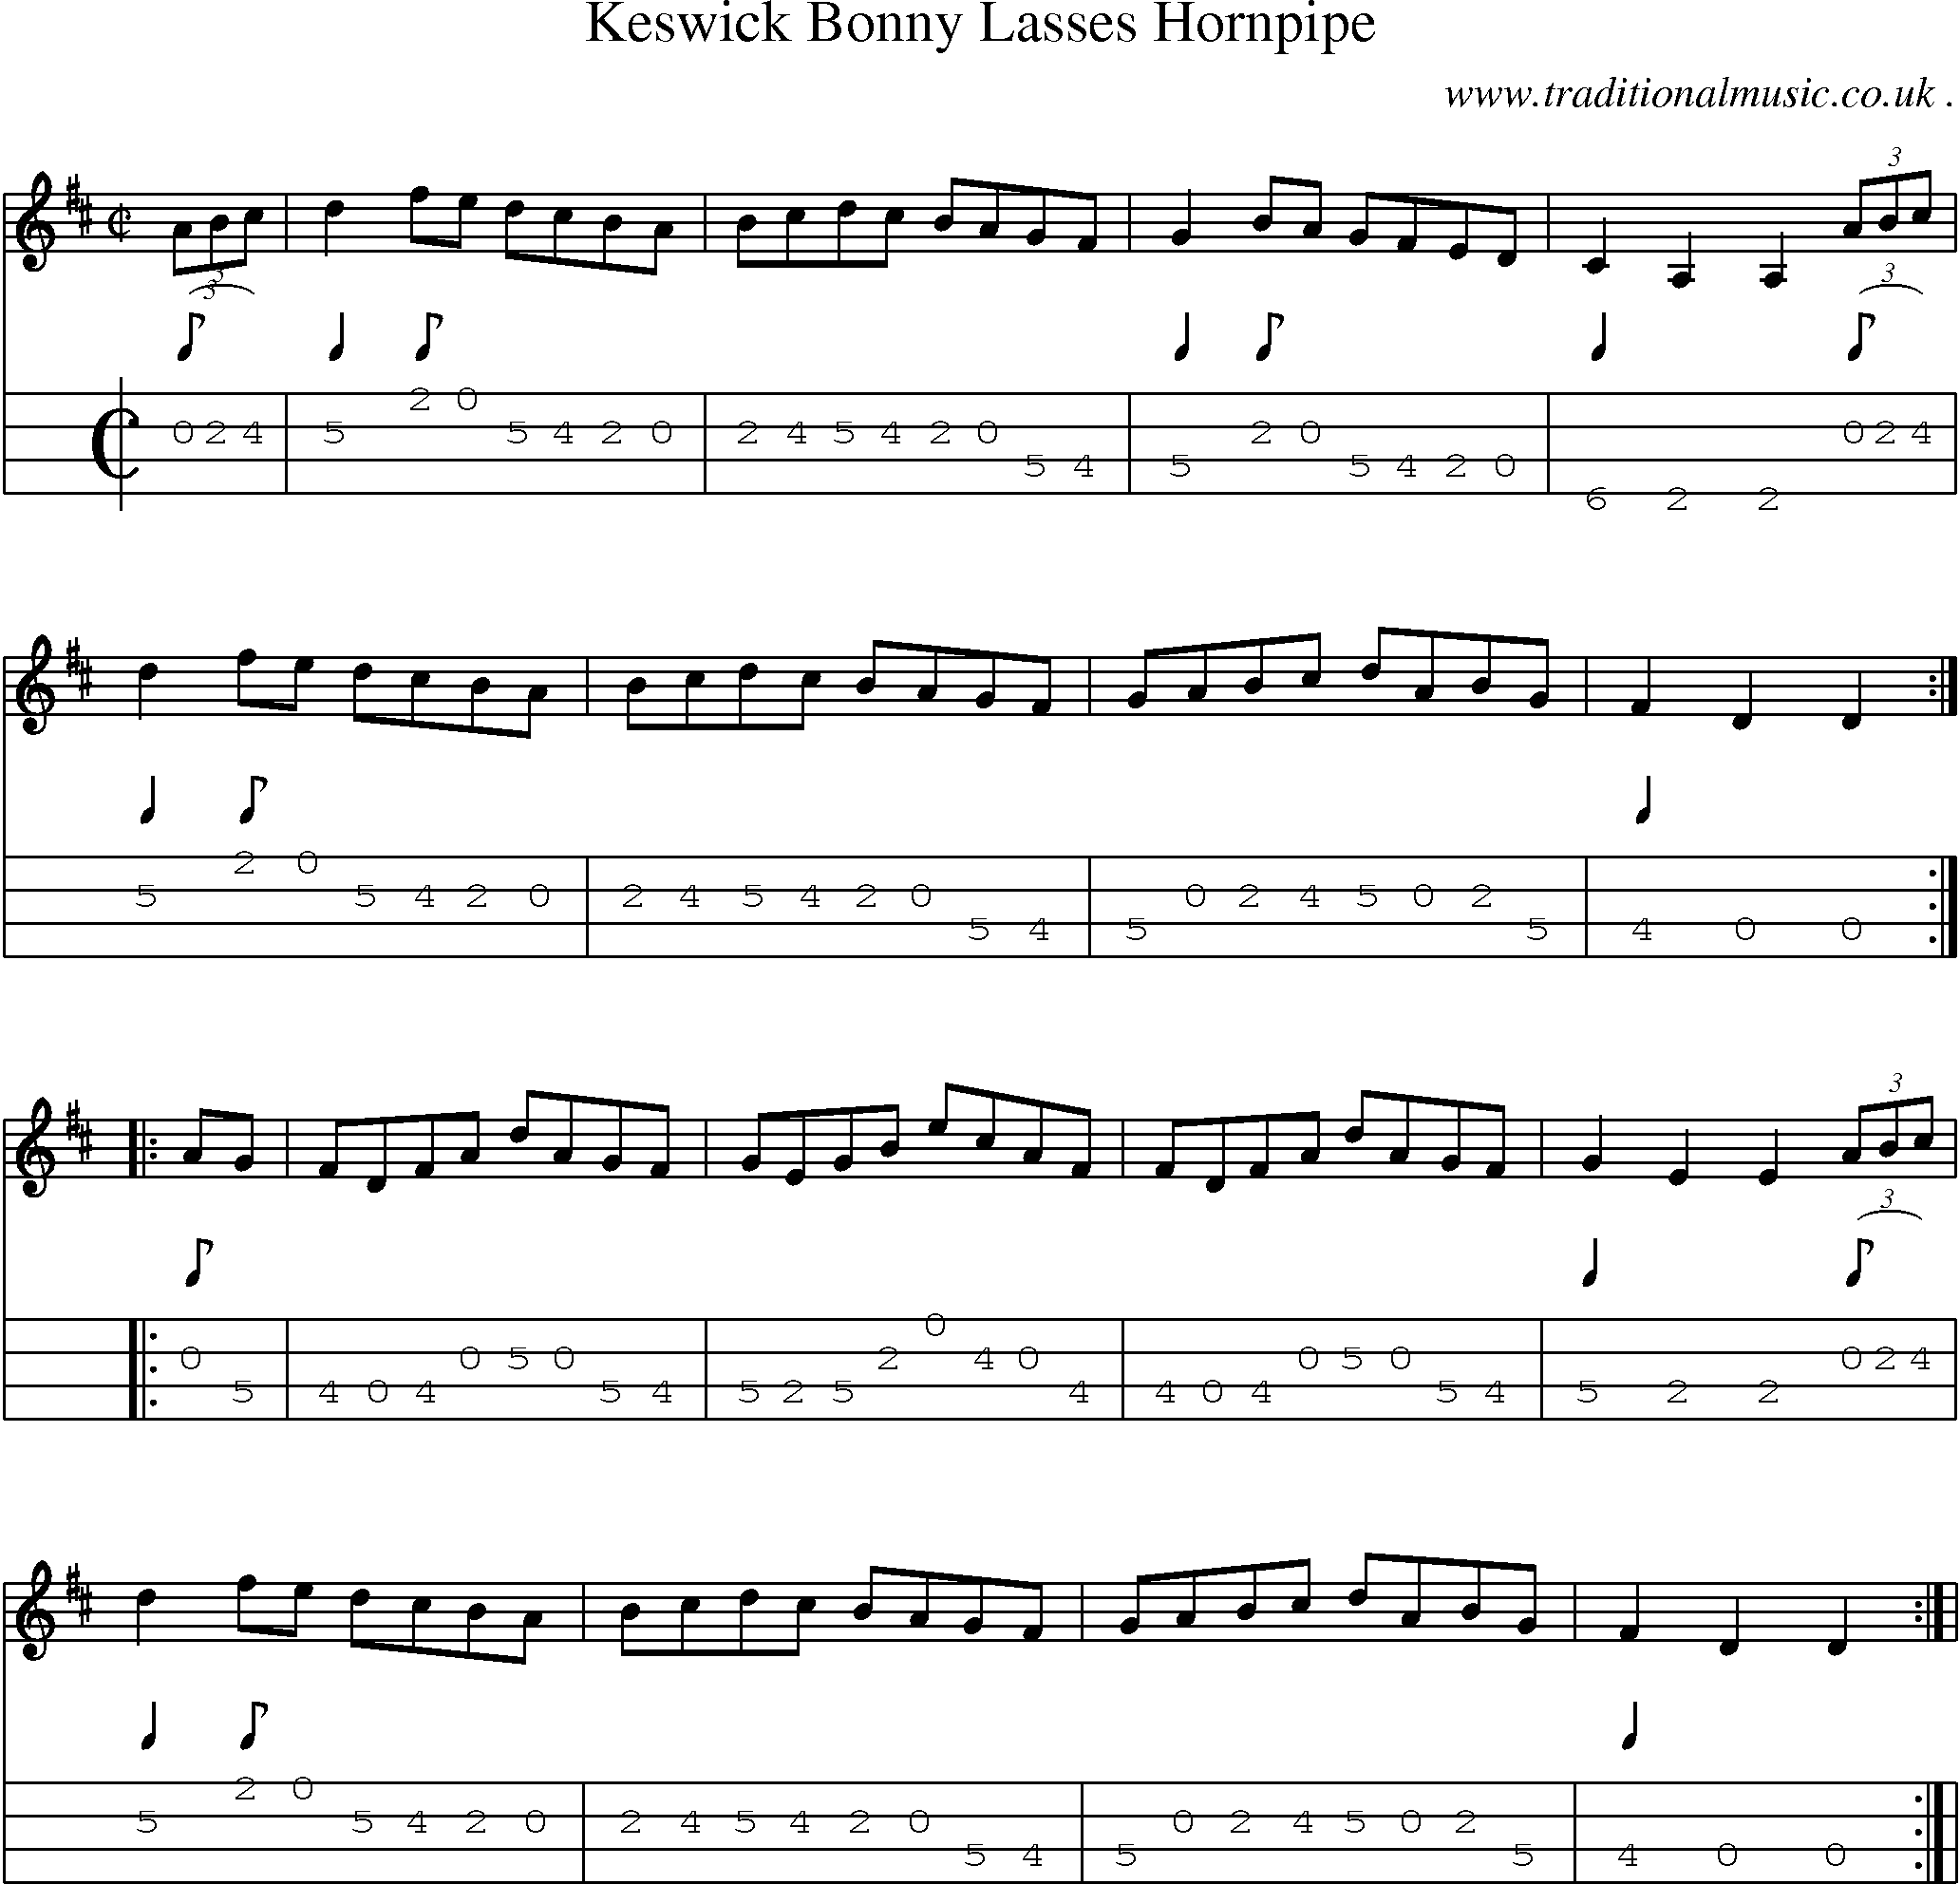 Sheet-Music and Mandolin Tabs for Keswick Bonny Lasses Hornpipe